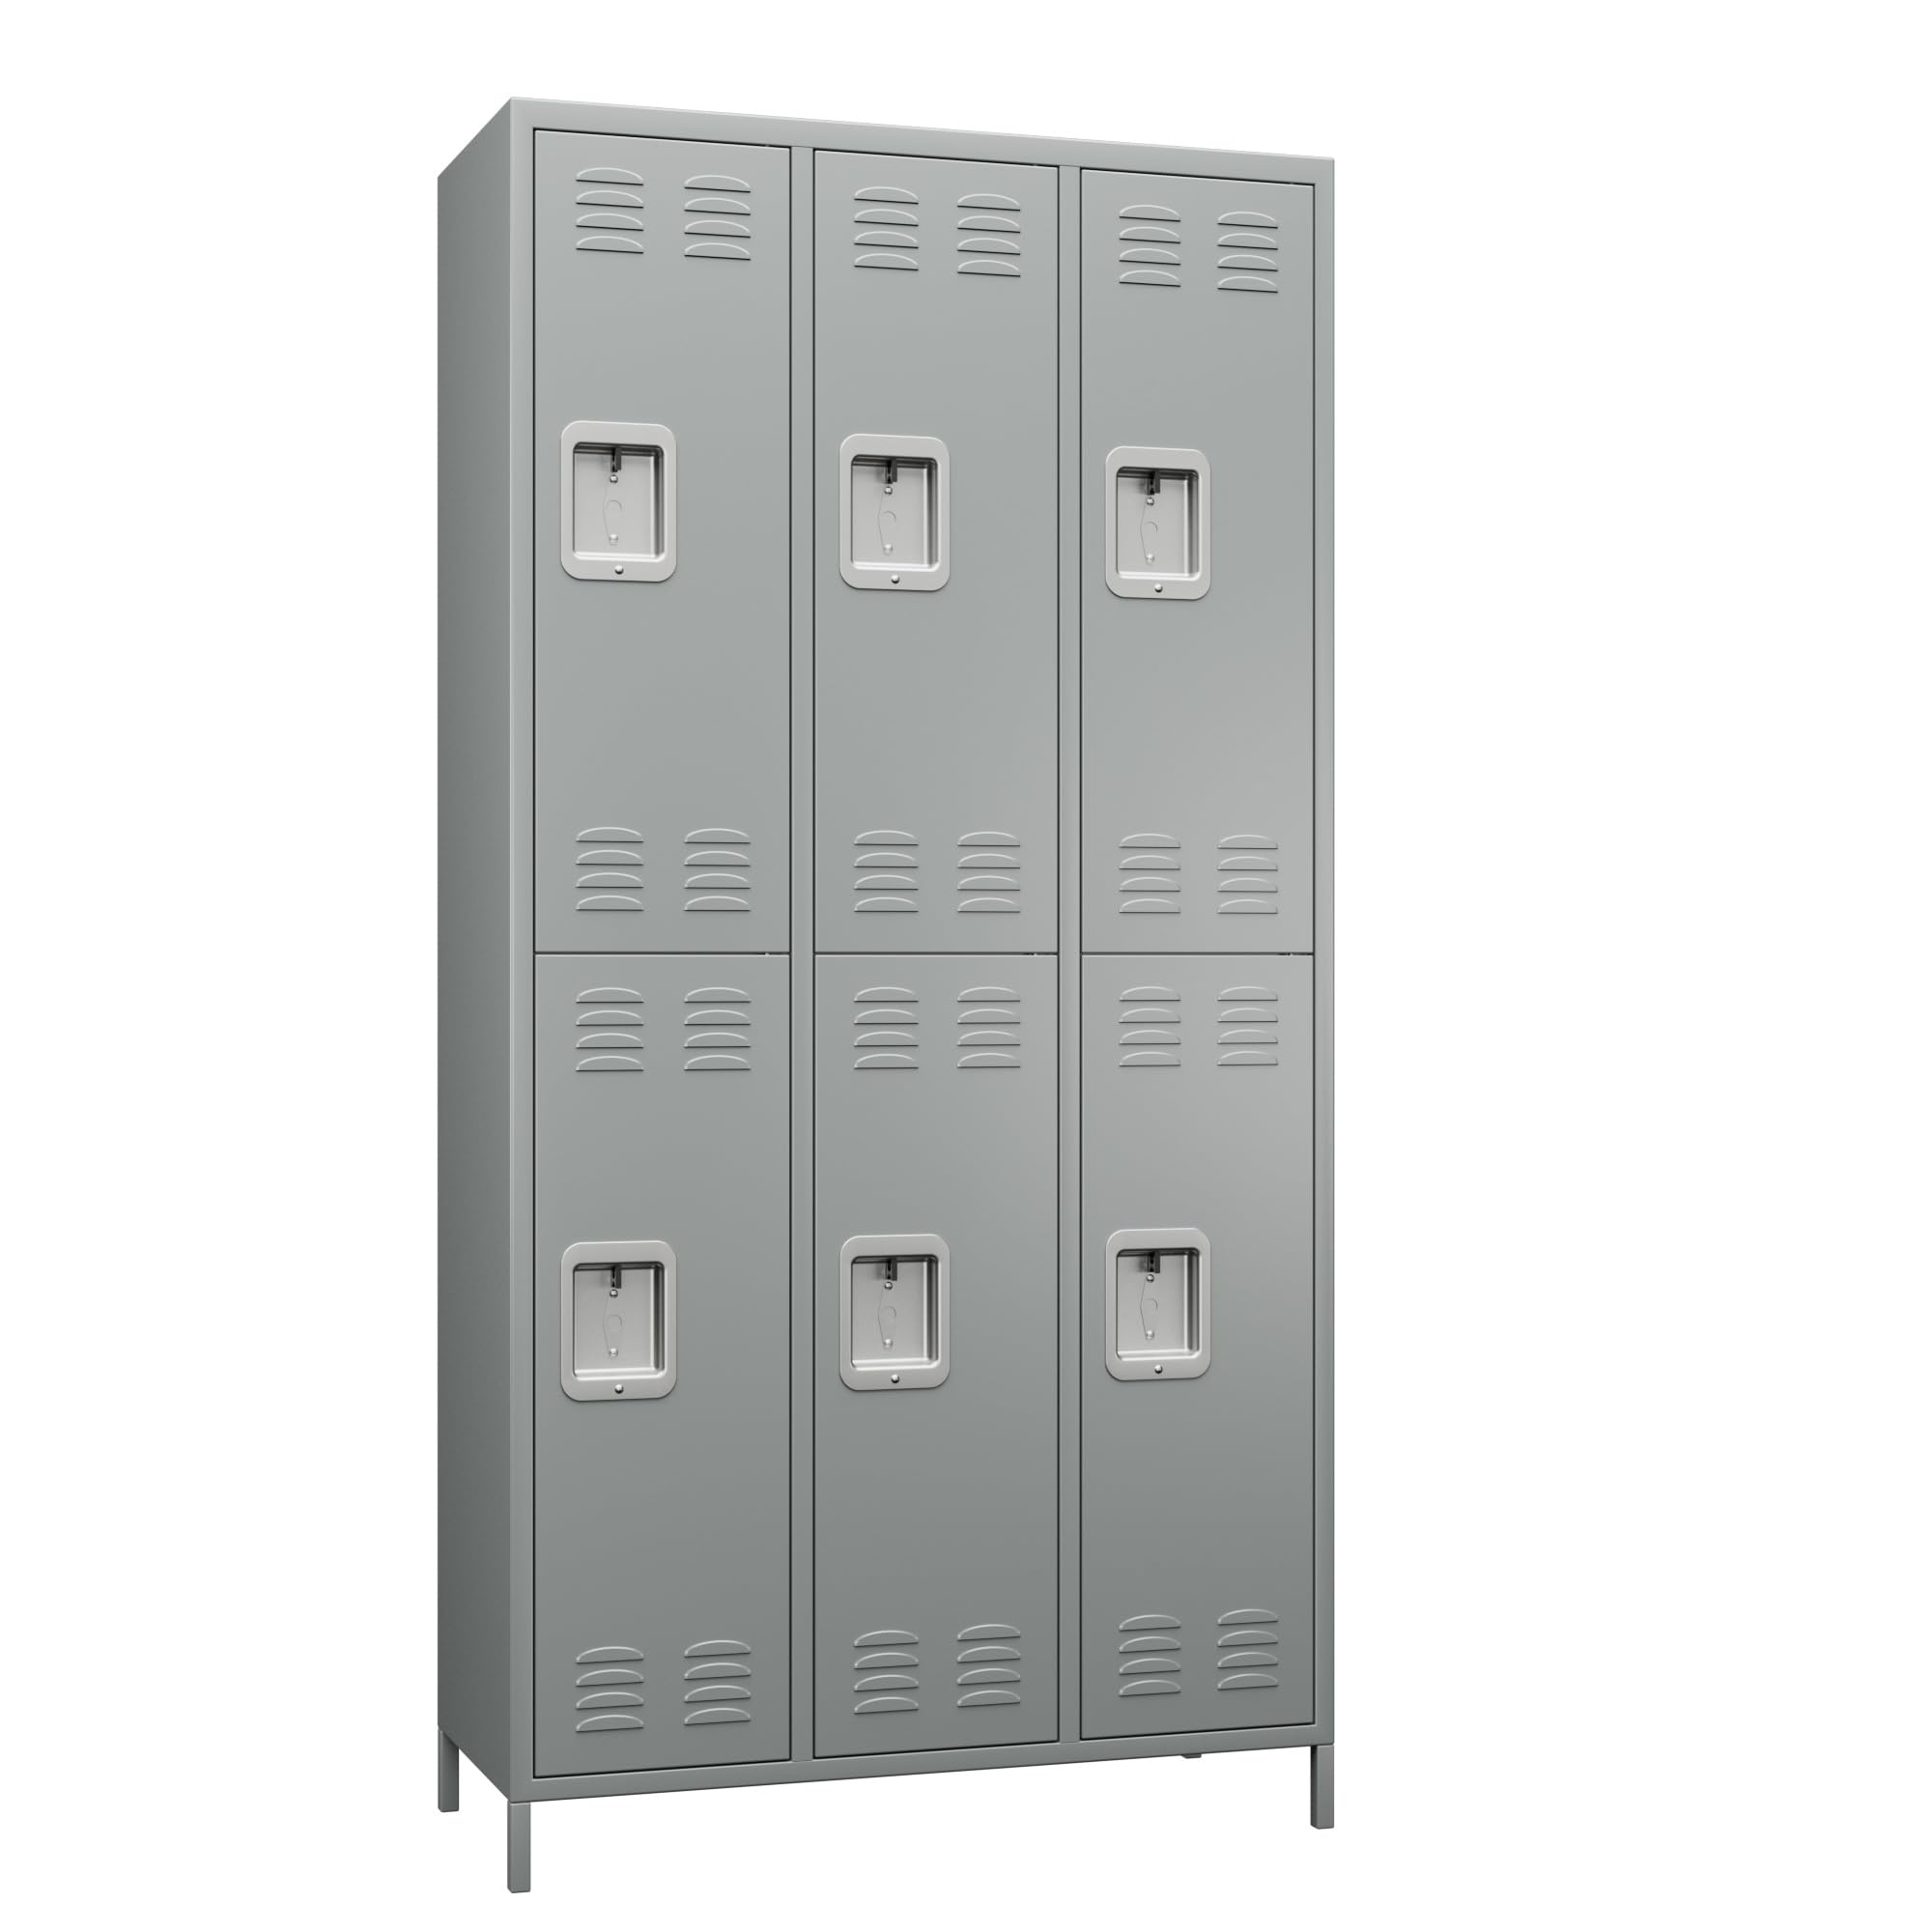 METAN Metal Locker for School Office Gym Bedroom,6 Doors Steel Storage Locker Cabinet for Employees,Industrial Storage Locker with 1 Shelves,Assembly Required (6 Door-Light Gray)…